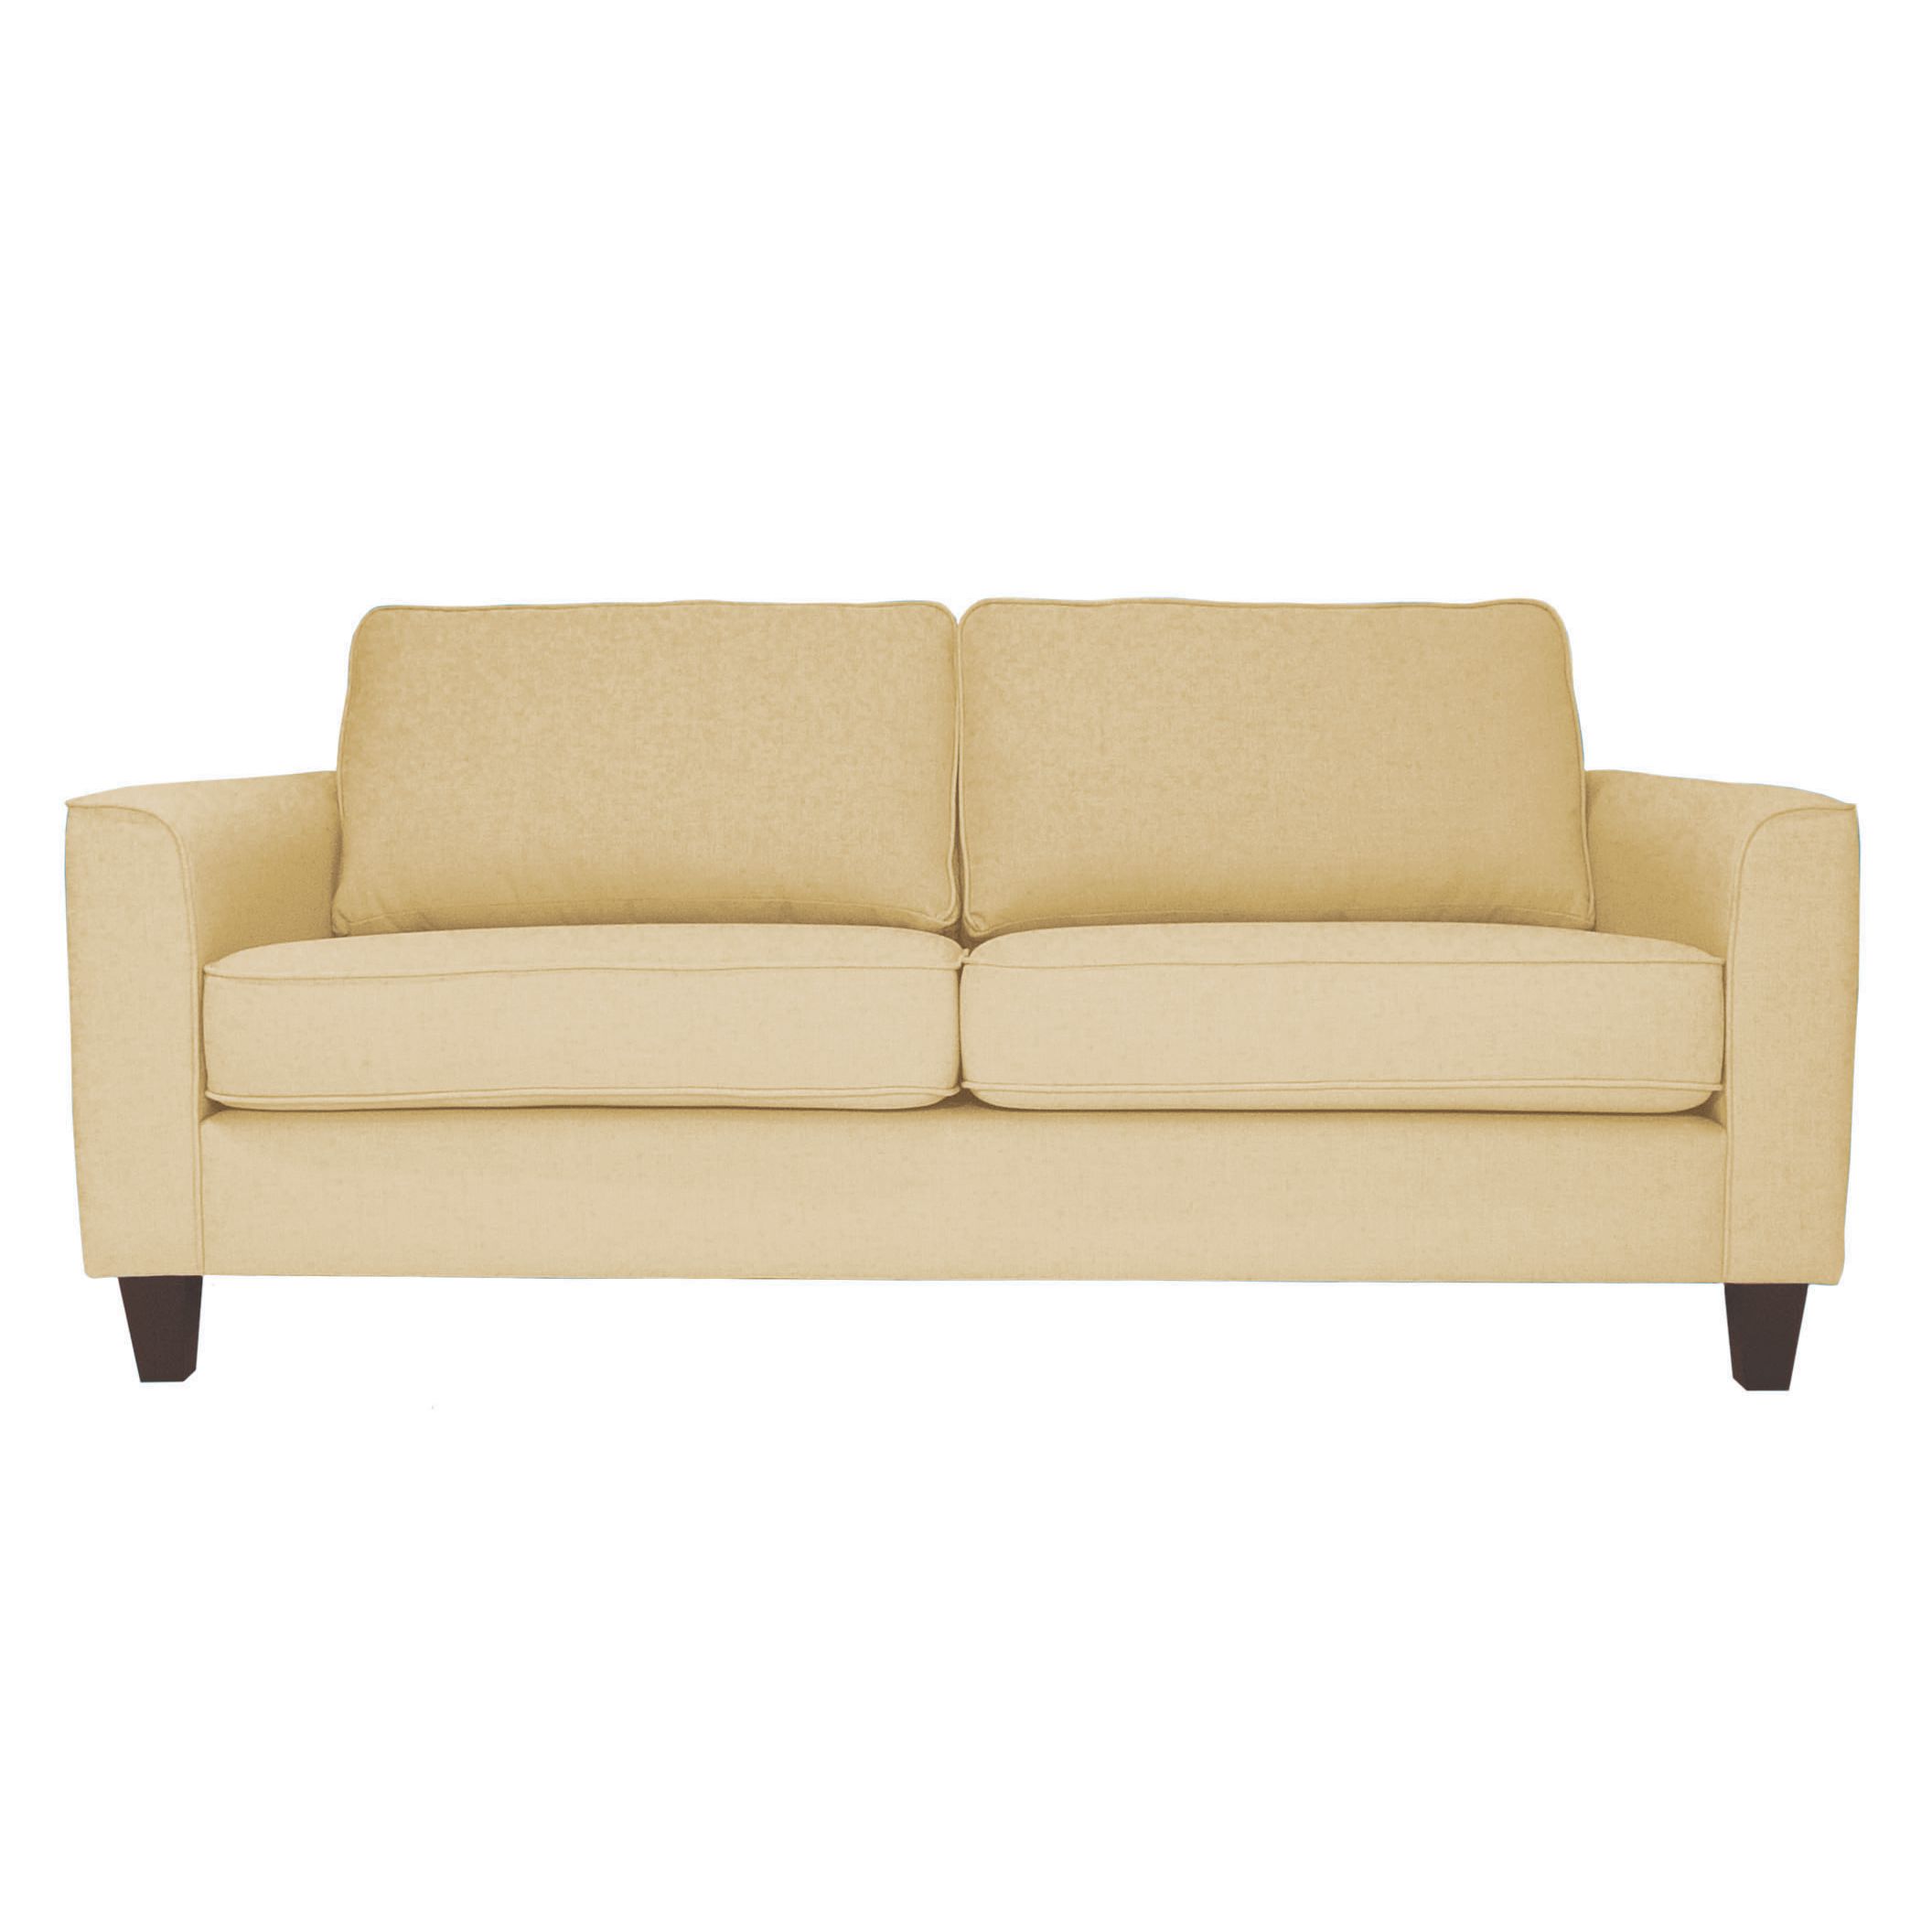 John Lewis Portia Medium Sofa, Camel